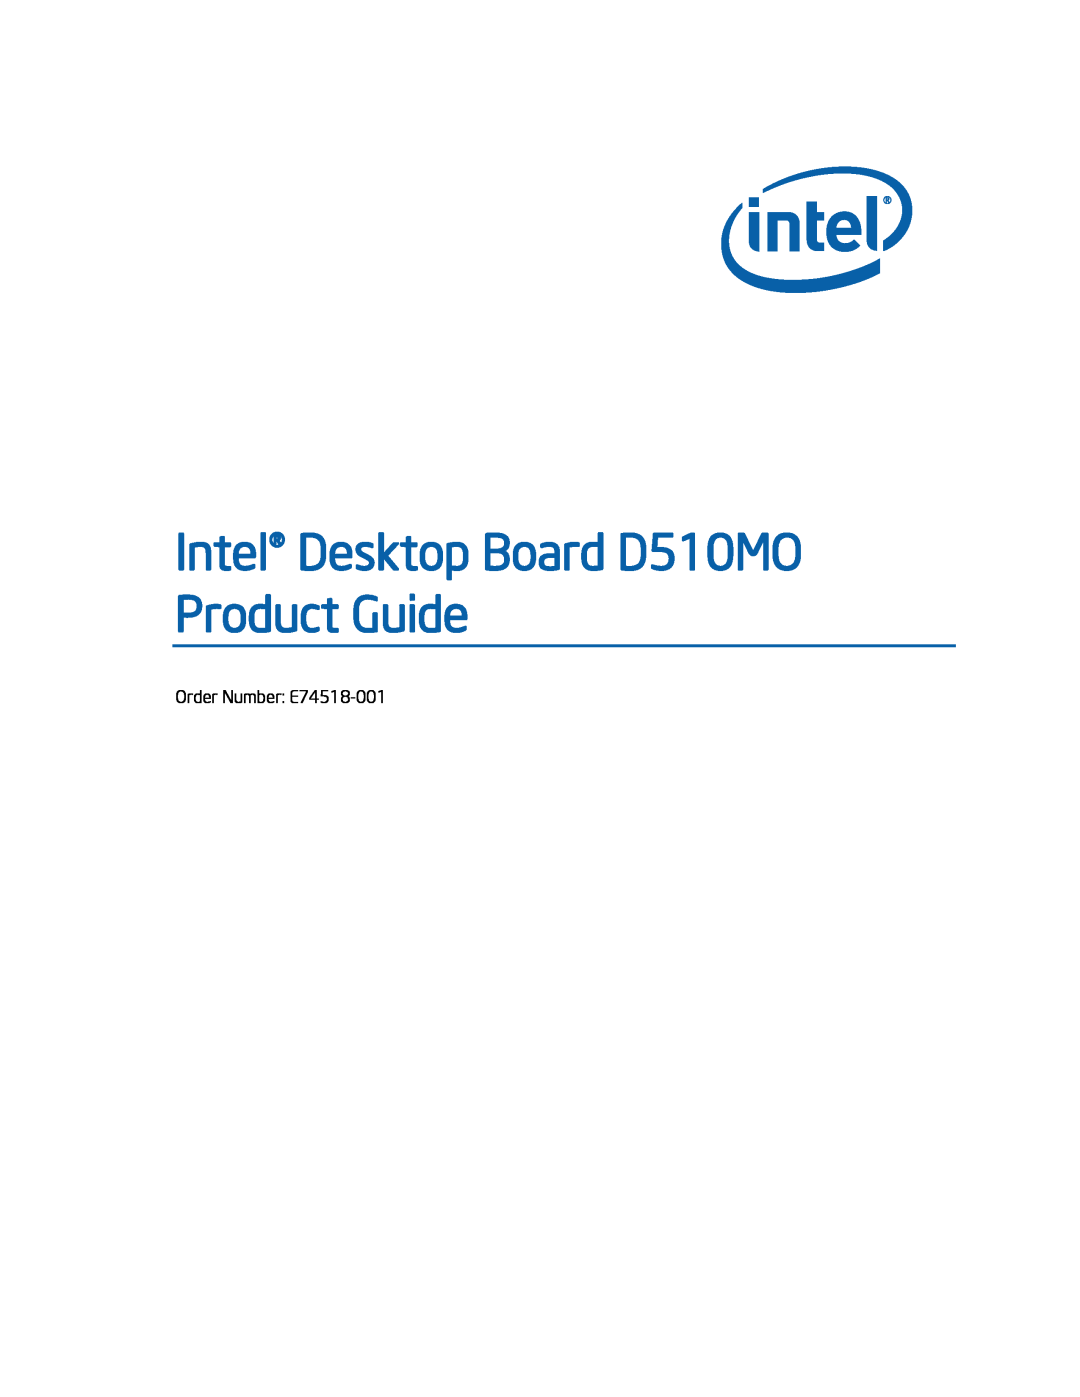 Intel manual Intel Desktop Board D510MO Product Guide, Order Number E74518-001 